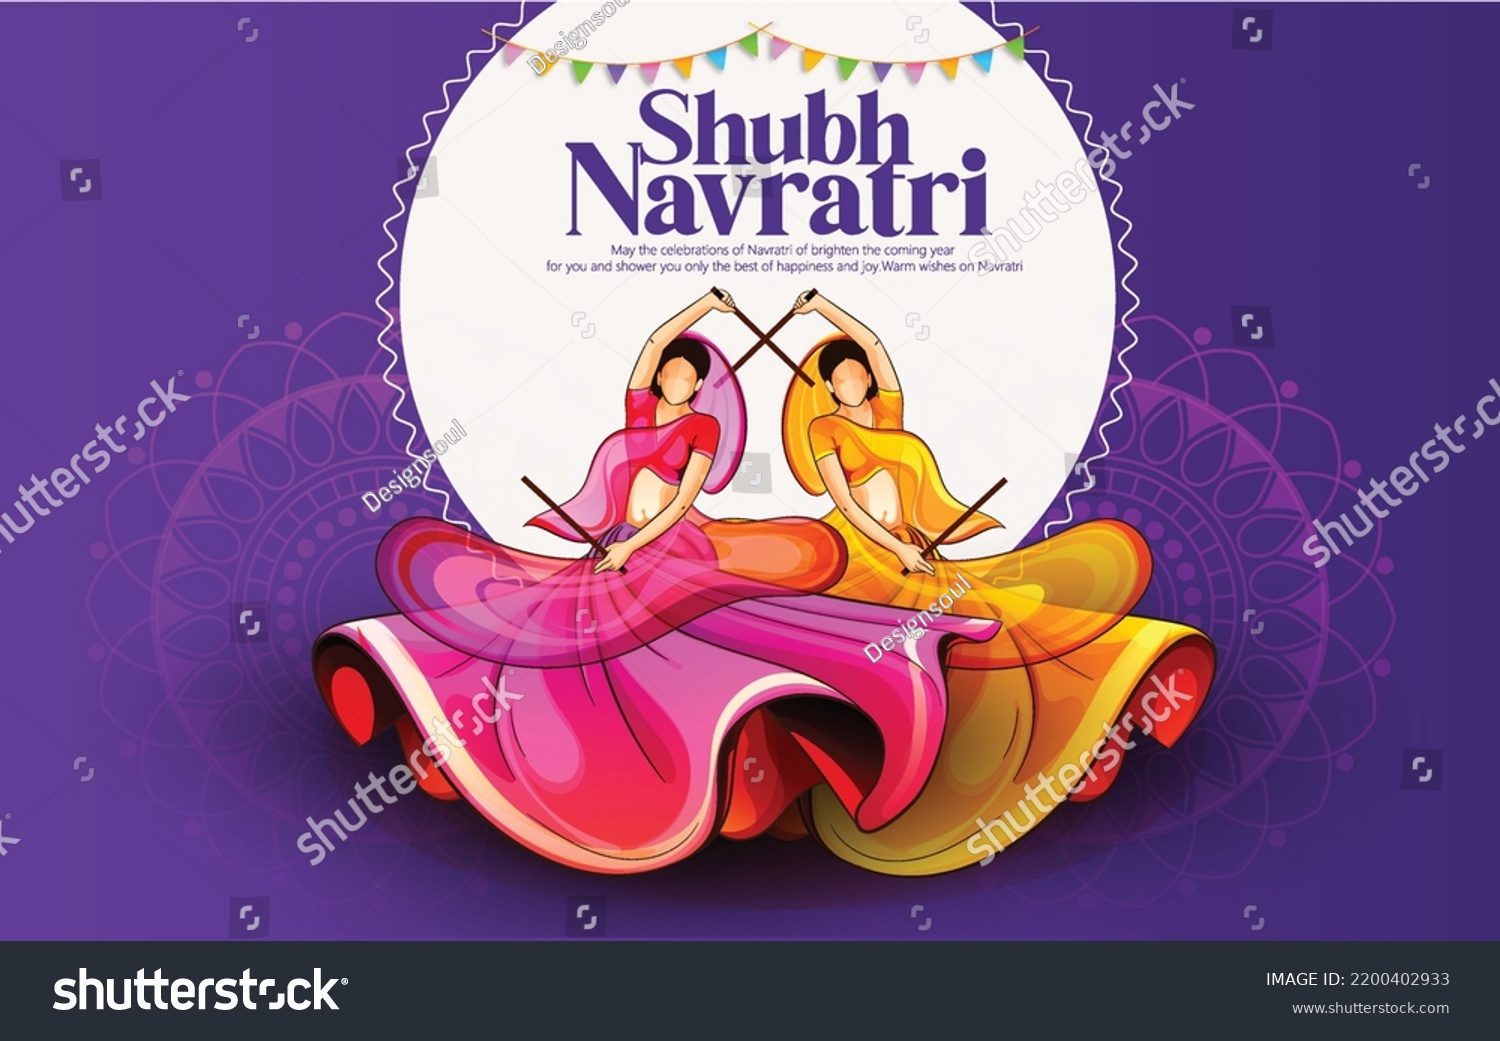 SVG of Happy Navratri, illustration of couple playing Dandiya in disco Garba Night banner poster for Navratri Dussehra festival of India svg